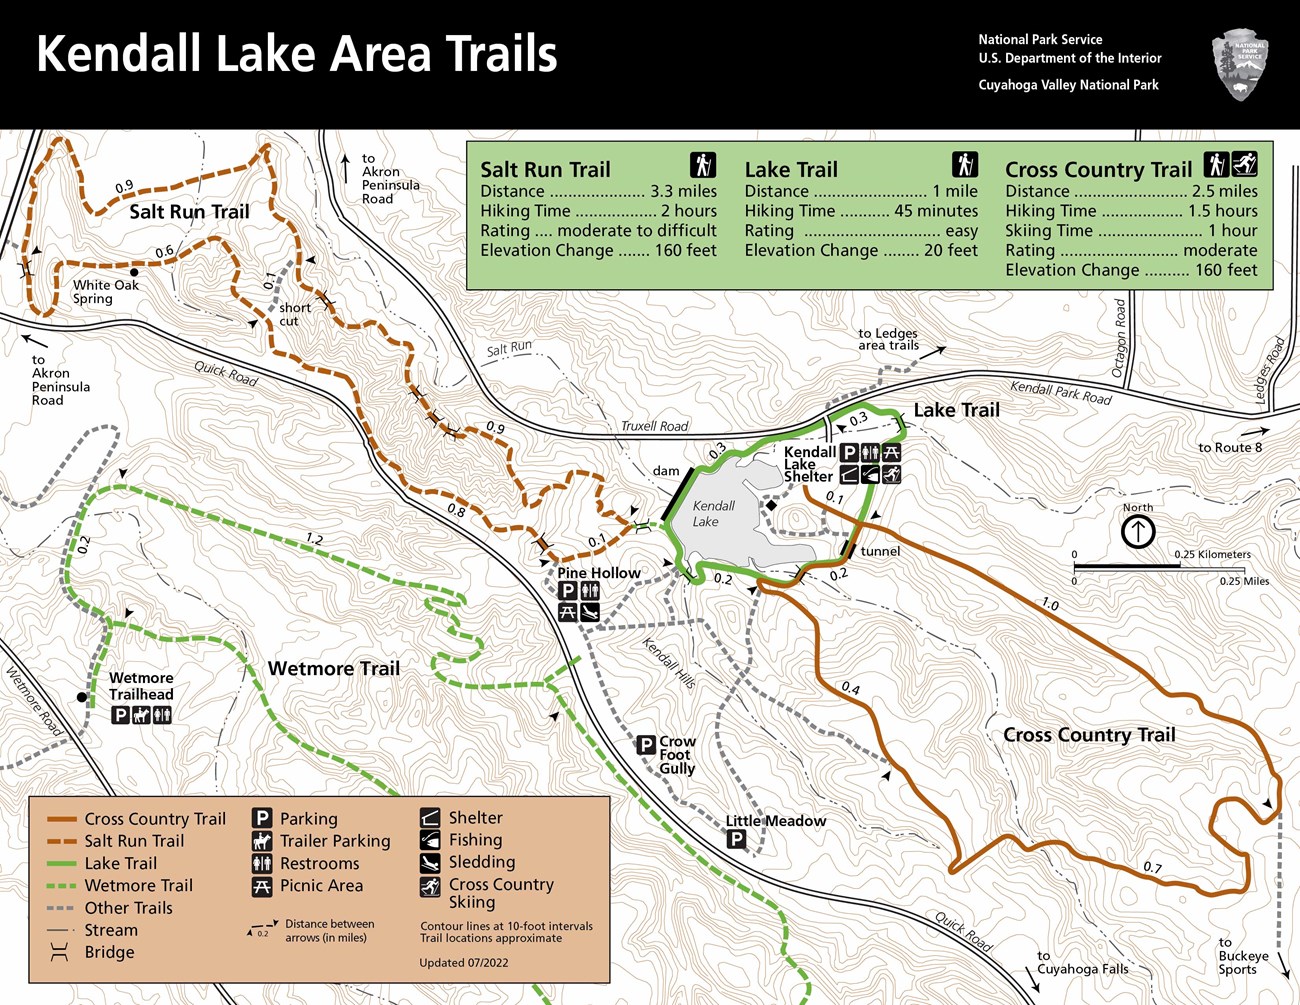 Salt Run, Lake, and Cross Country Trails around Kendall Lake and Hills. Salt Run Trail, 3.3-mile loop, 160 feet elevation change. Lake Trail, 1 mile loop, 20 feet elevation change, stairs. Cross Country Trail, 2.5-mile loop, 160 feet elevation change.